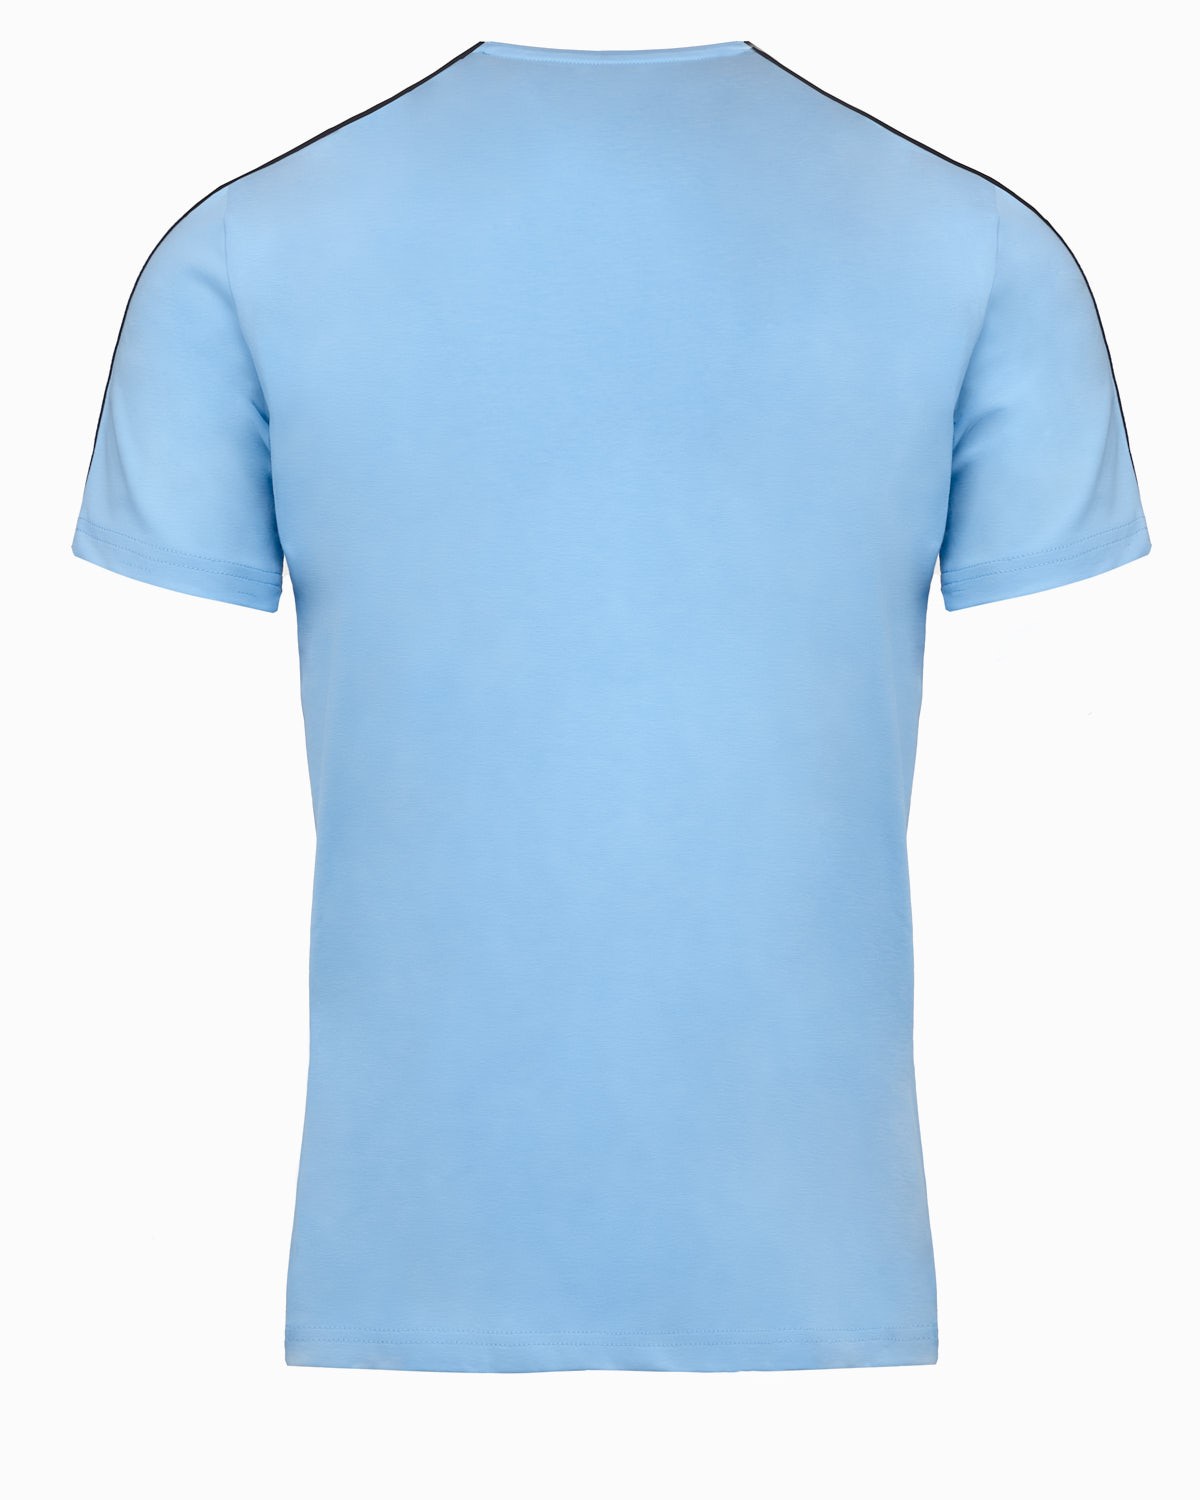 T-Shirt B&W Limited Carbon Edition Blue